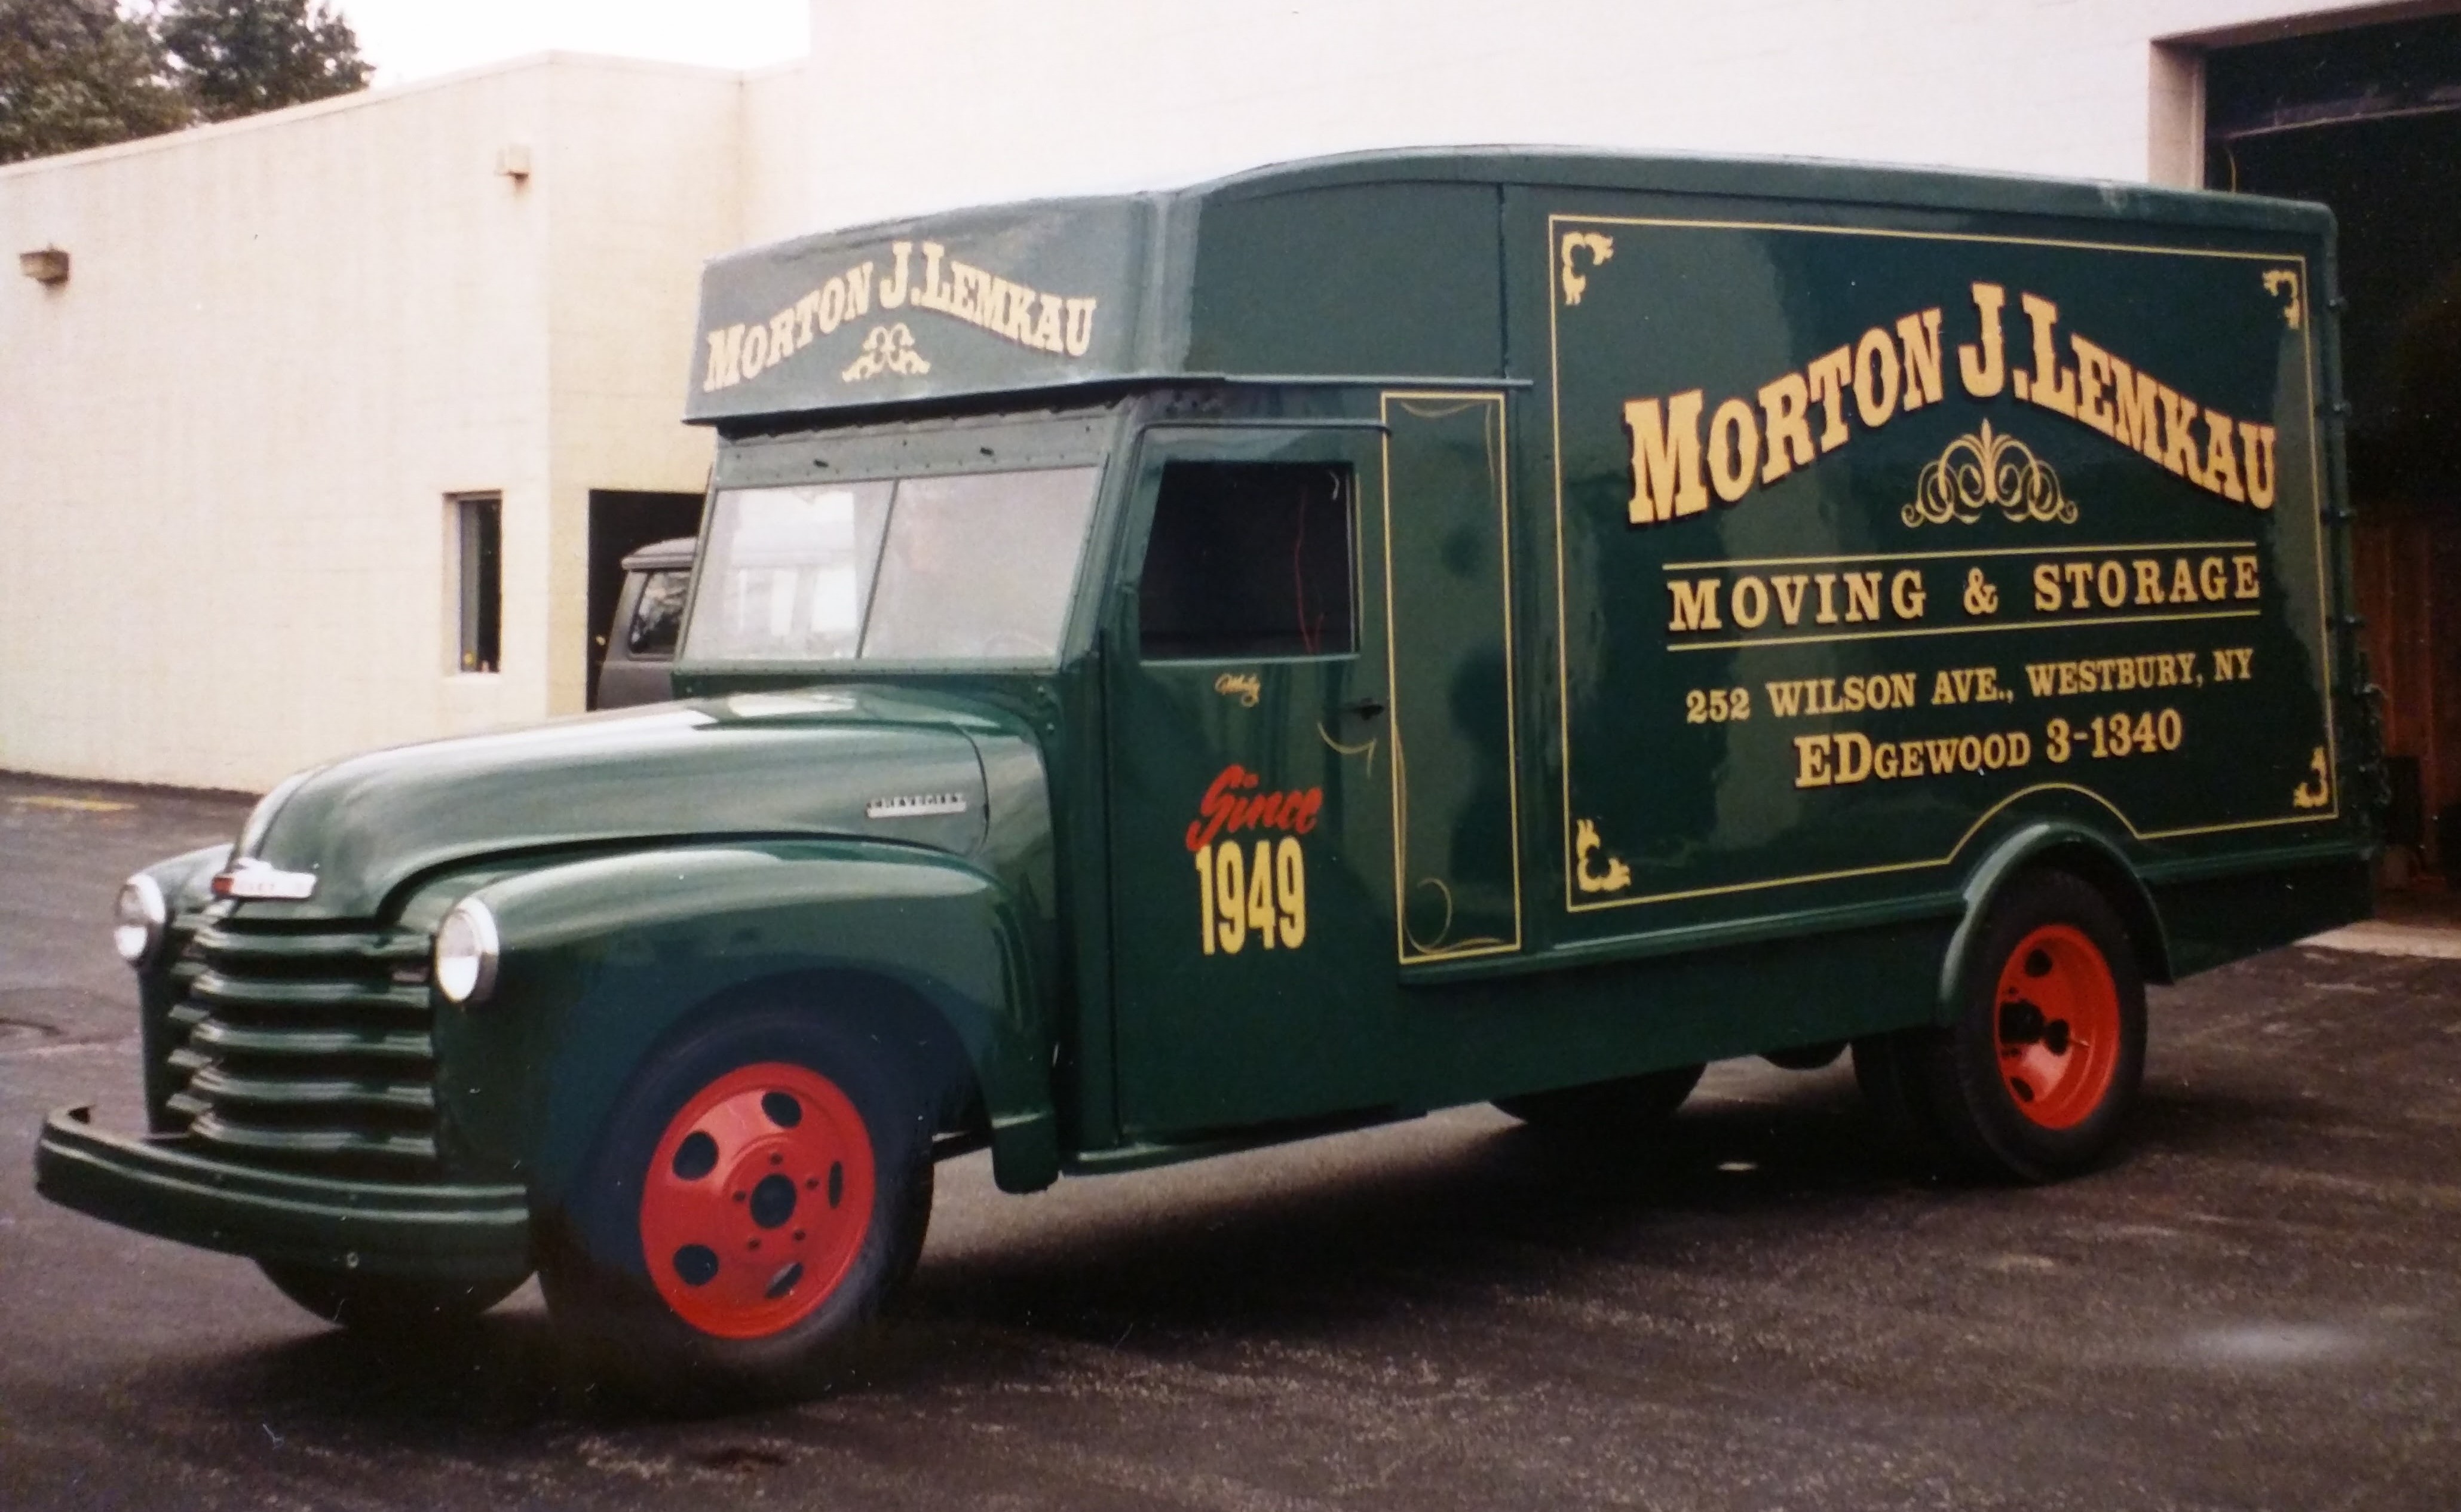 Morton J. Lemkau Moving and Storage - Antique Moving Truck